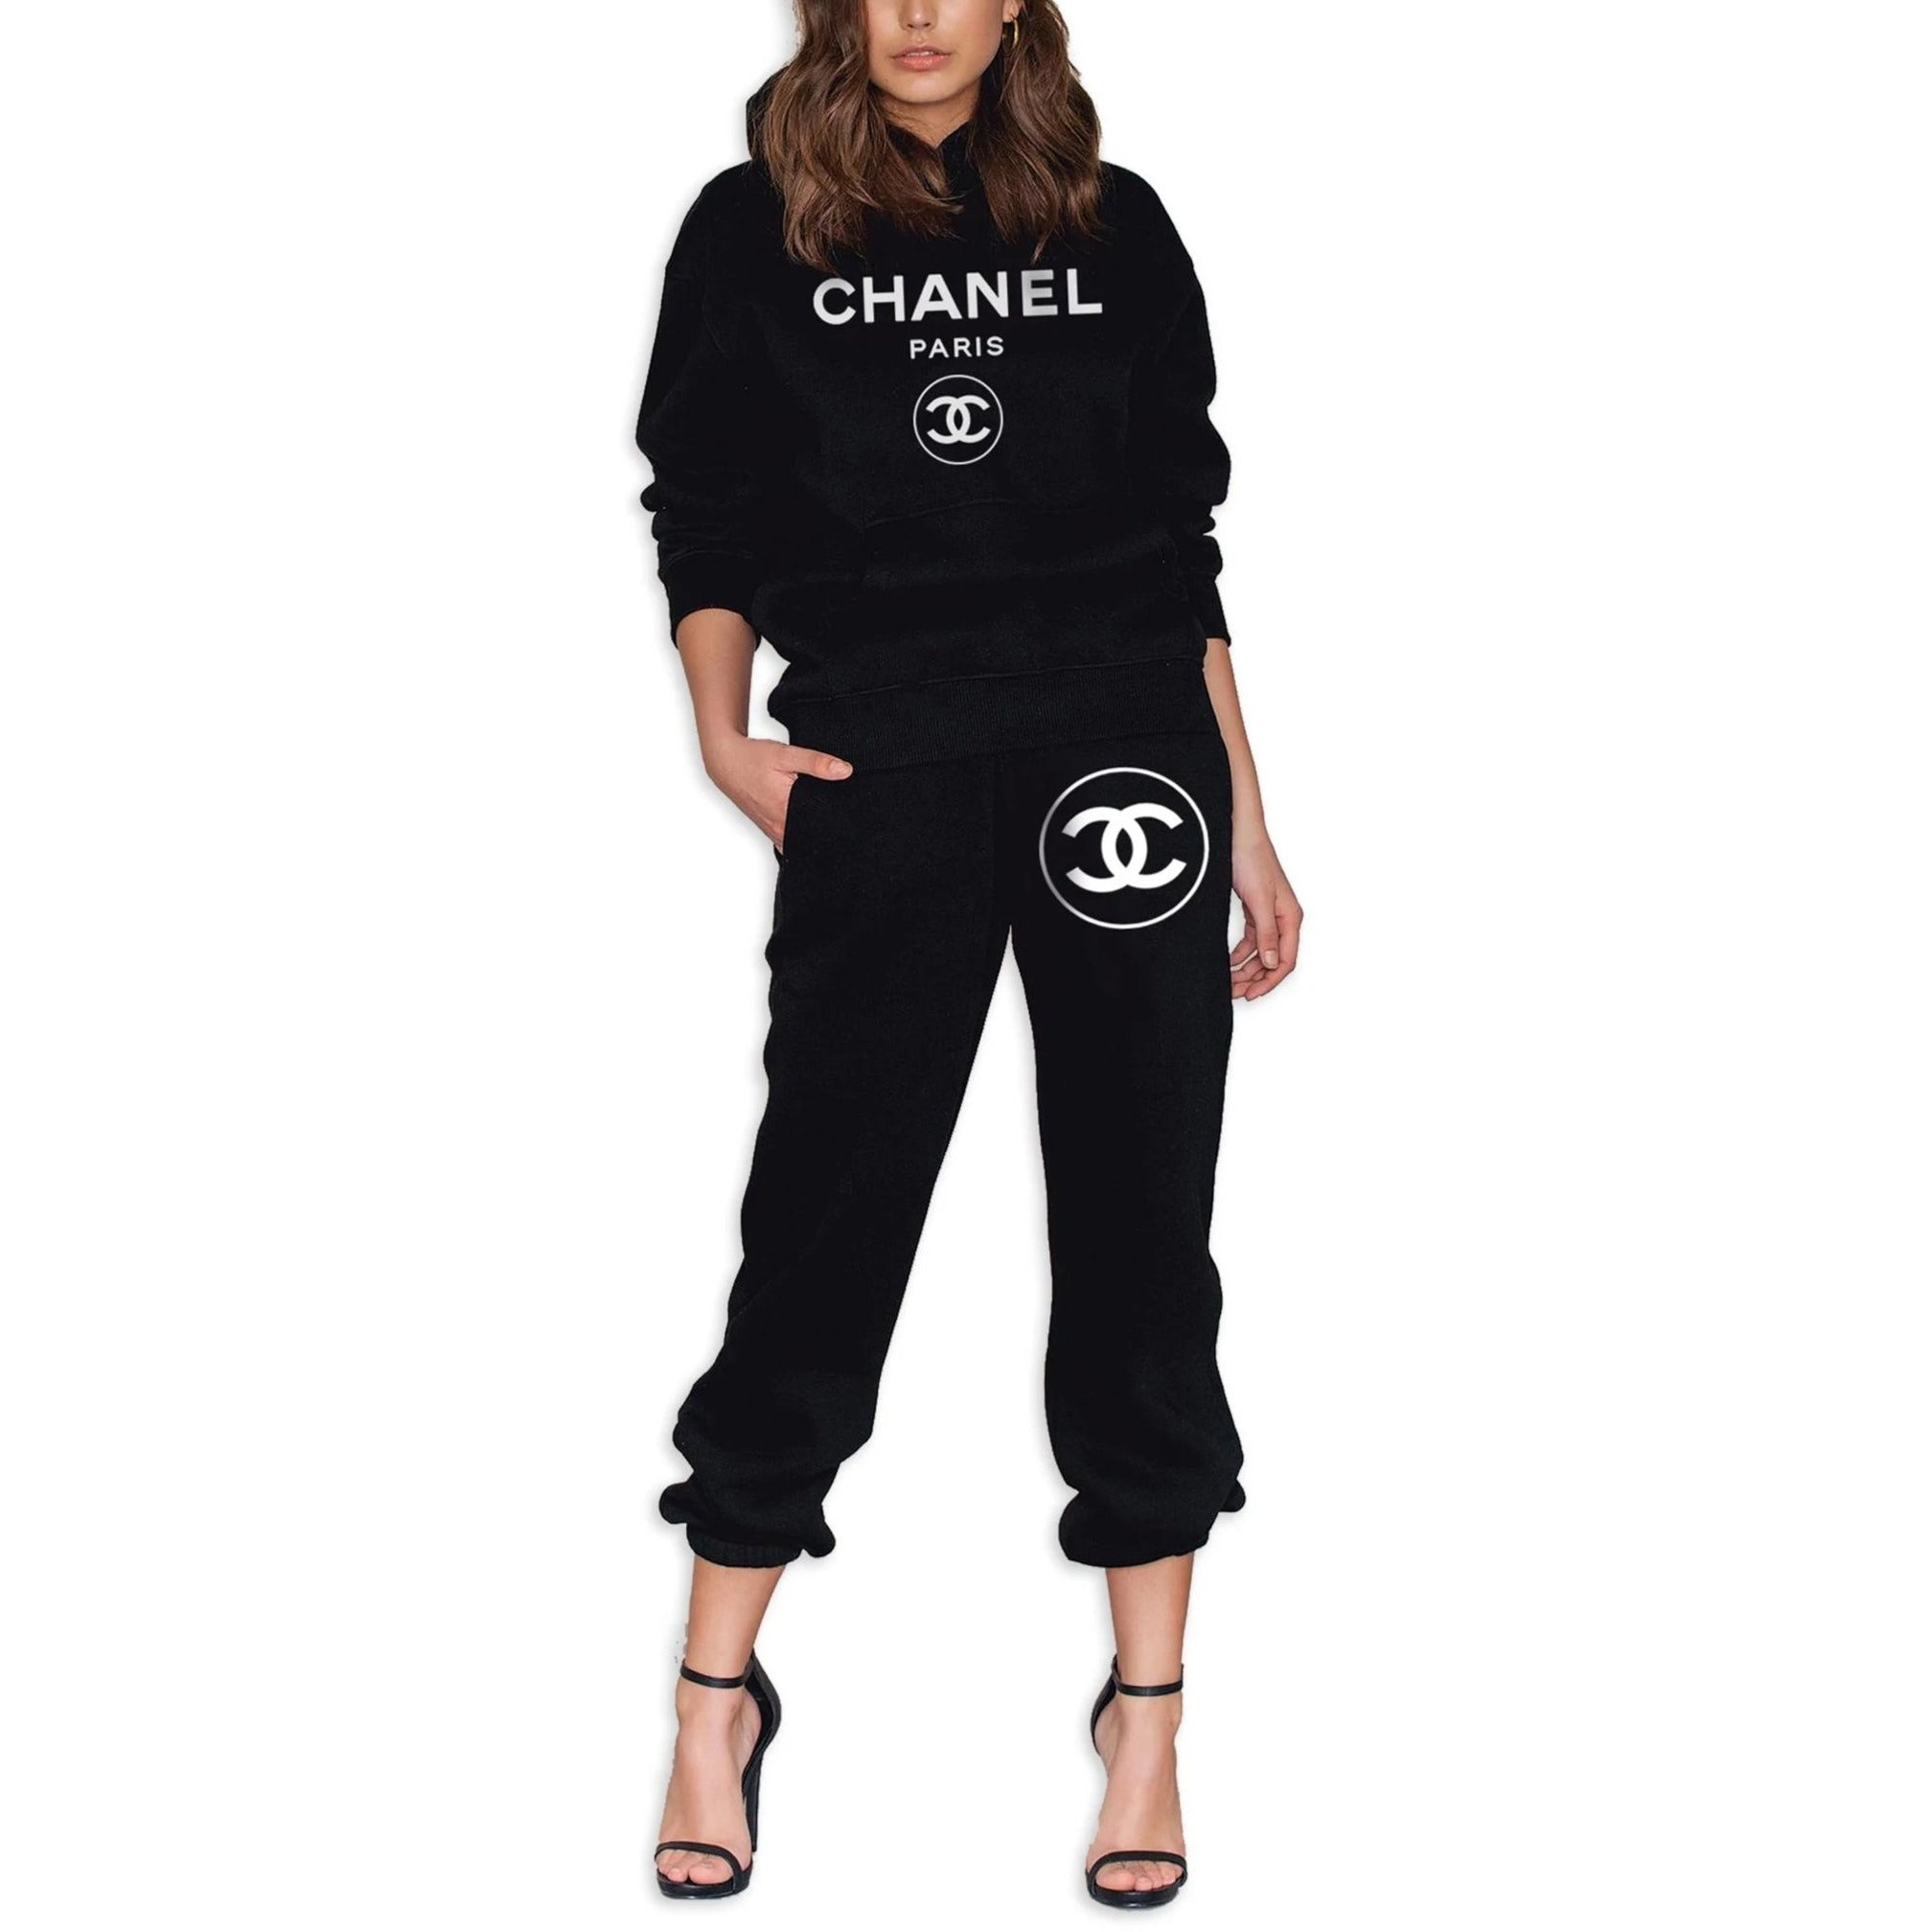 Coco Chanel Paris Hoodie Jacket Top Women's Men's Sweatpant Set